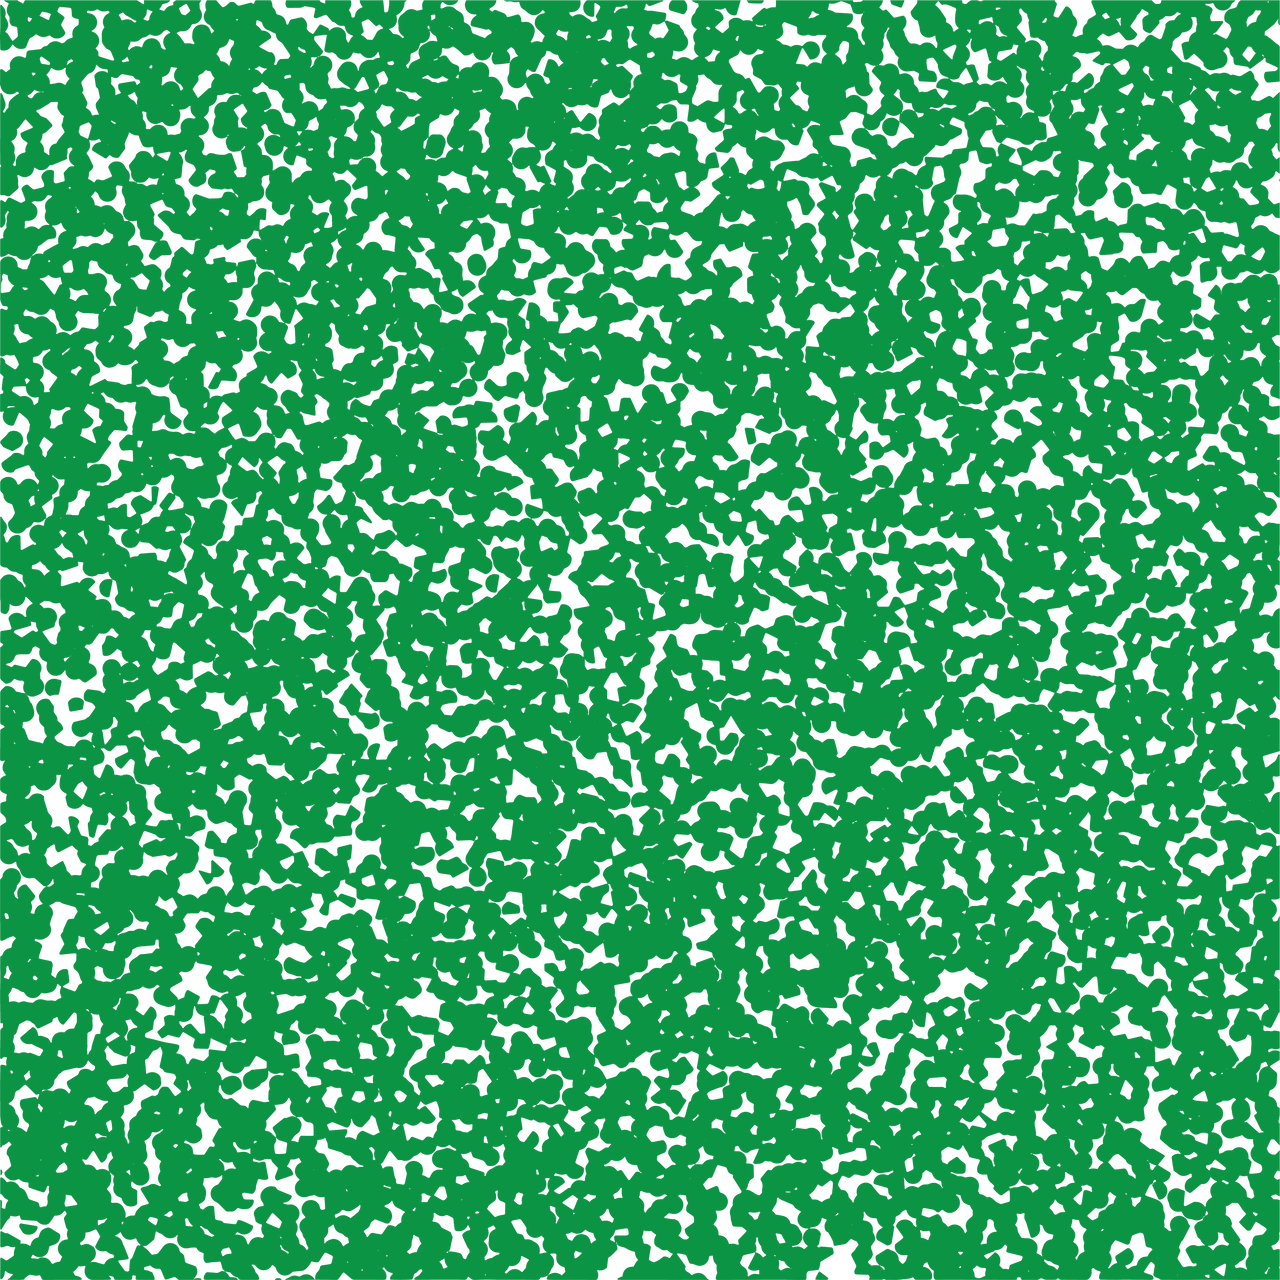 Printed pattern permanent vinyl Green Buffalo Plaid Print 12 x 12